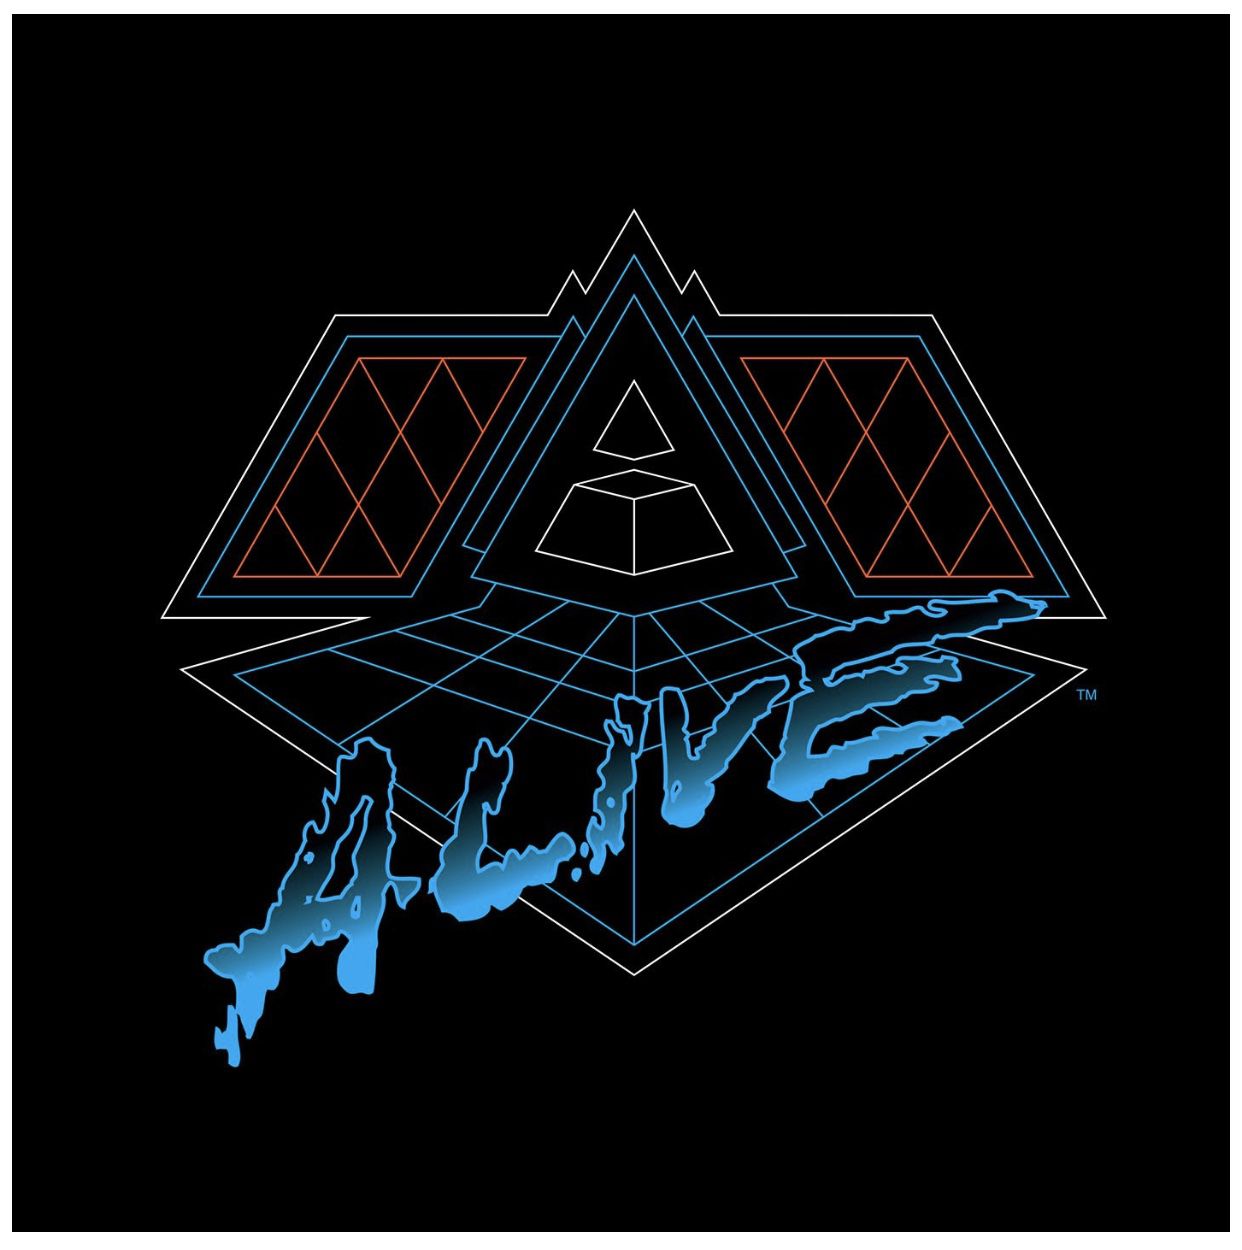 Daft Punk- Alive on vinyl